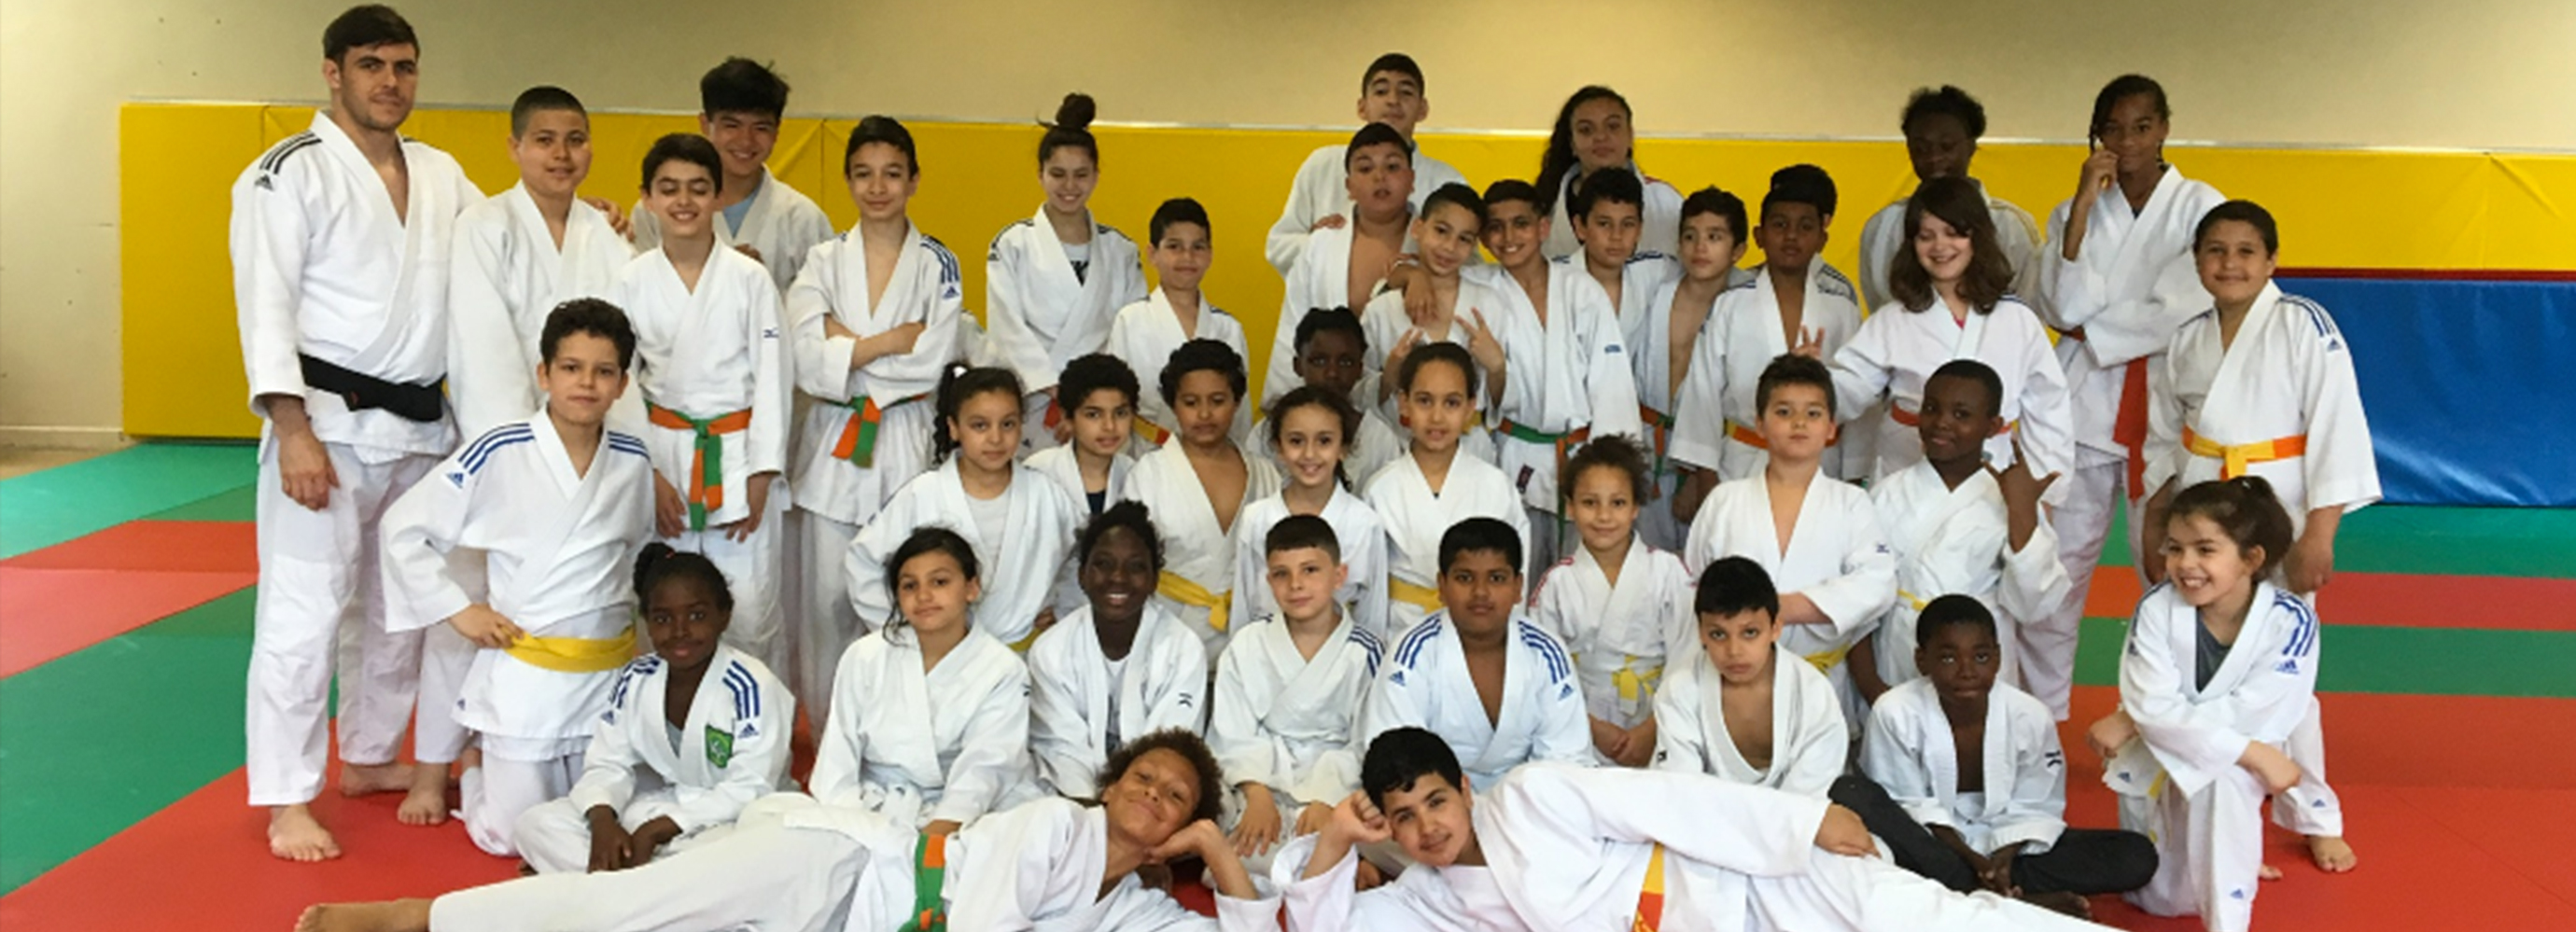 Ecole de judo